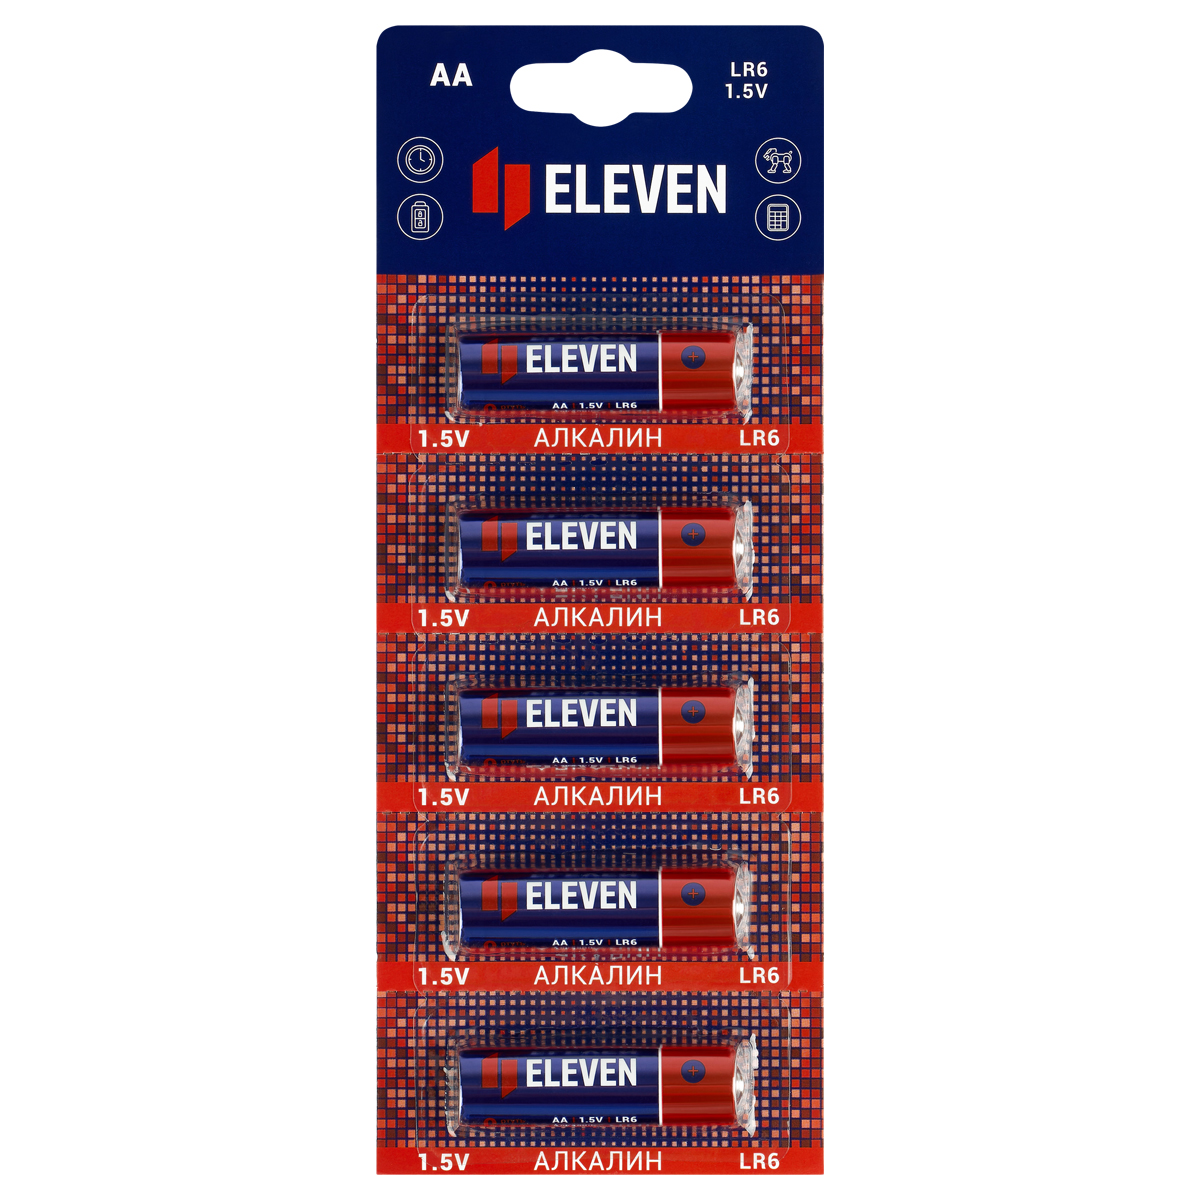  Eleven AA (LR6) , BC5   